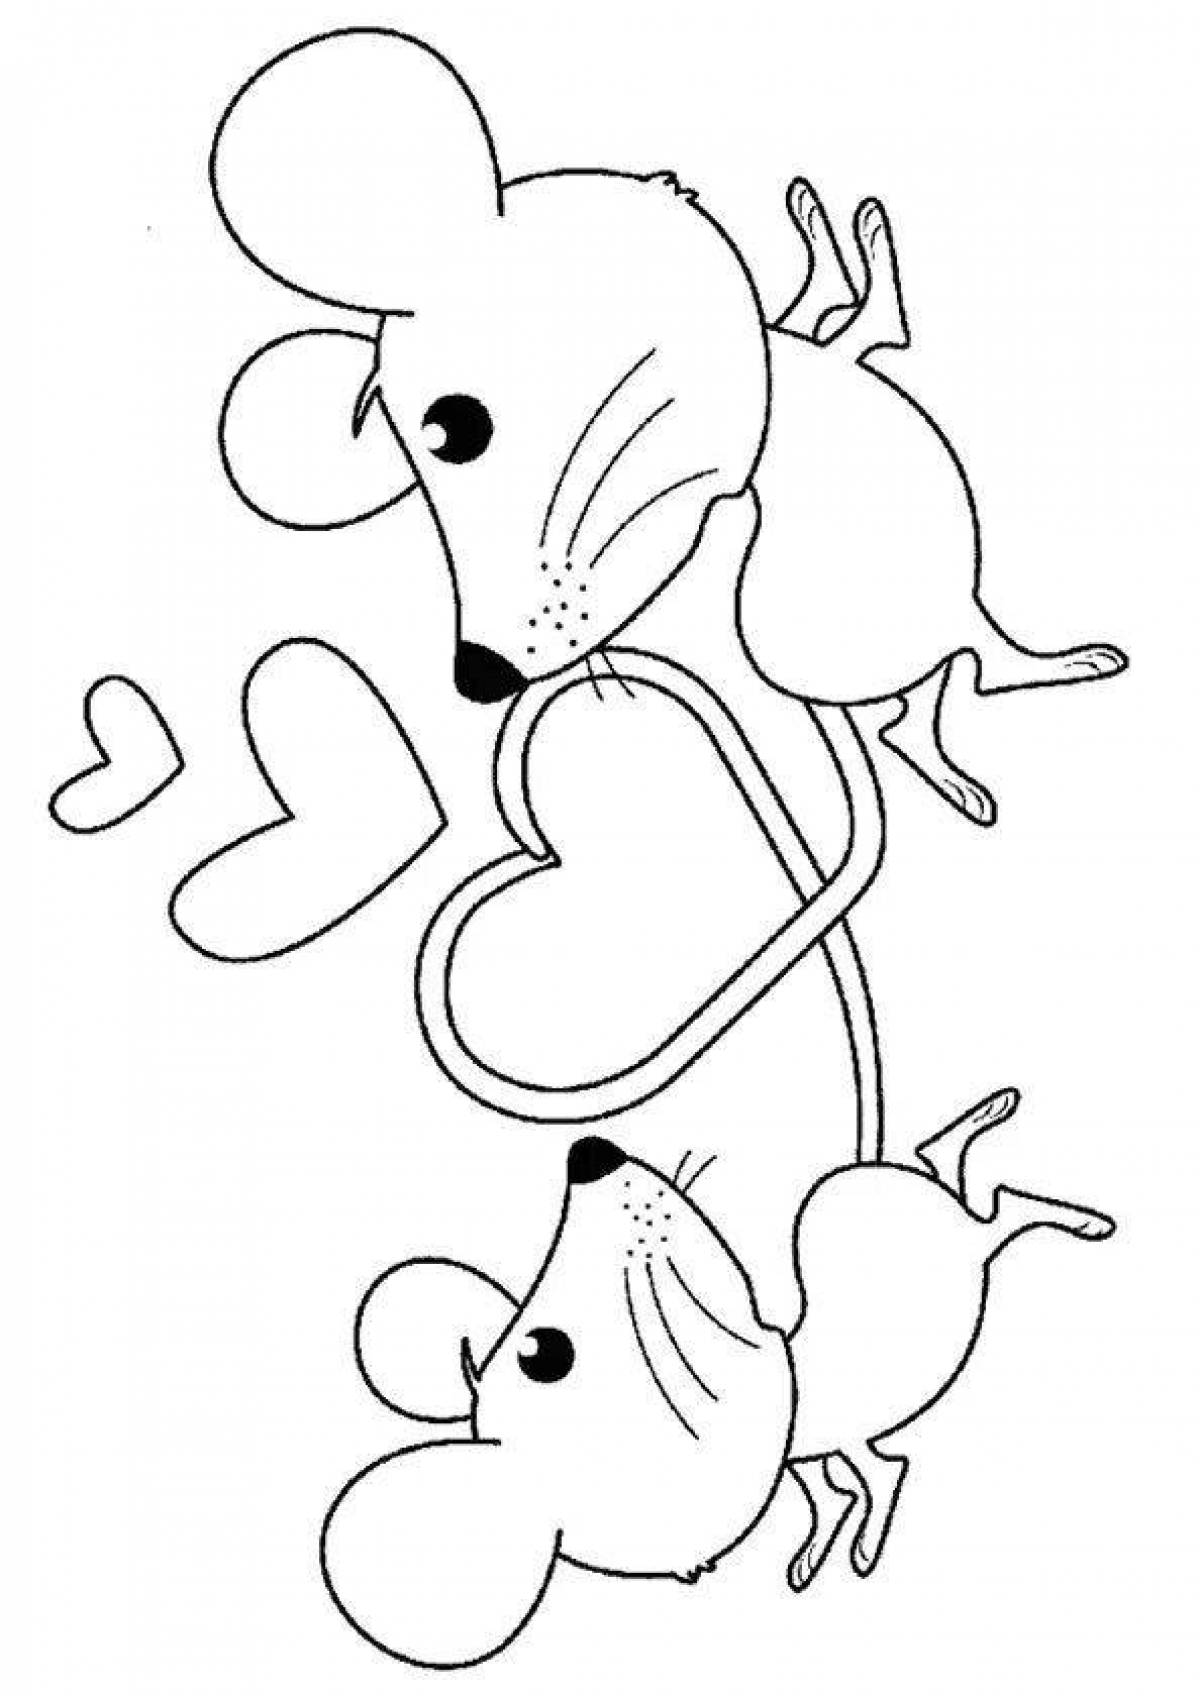 Living rat coloring book for kids